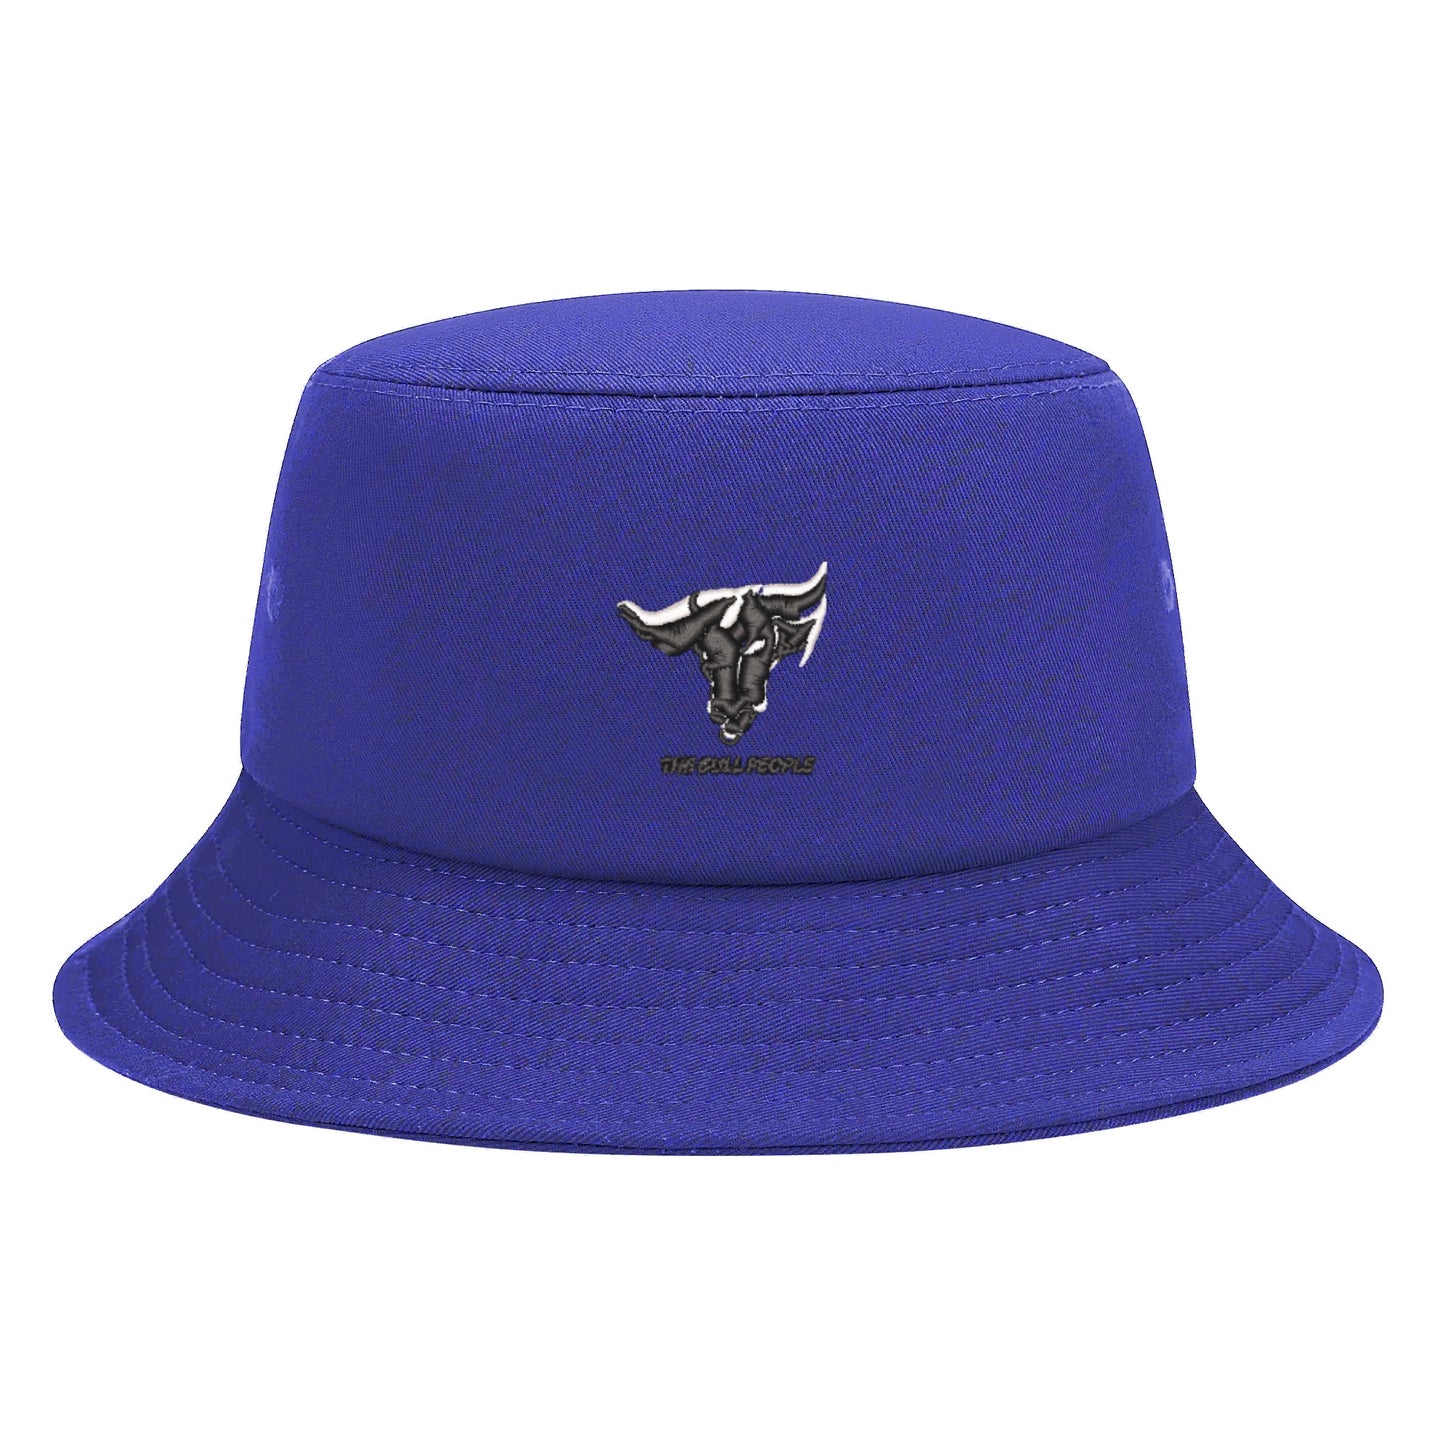 fz embroidered bucket hats blue / universal